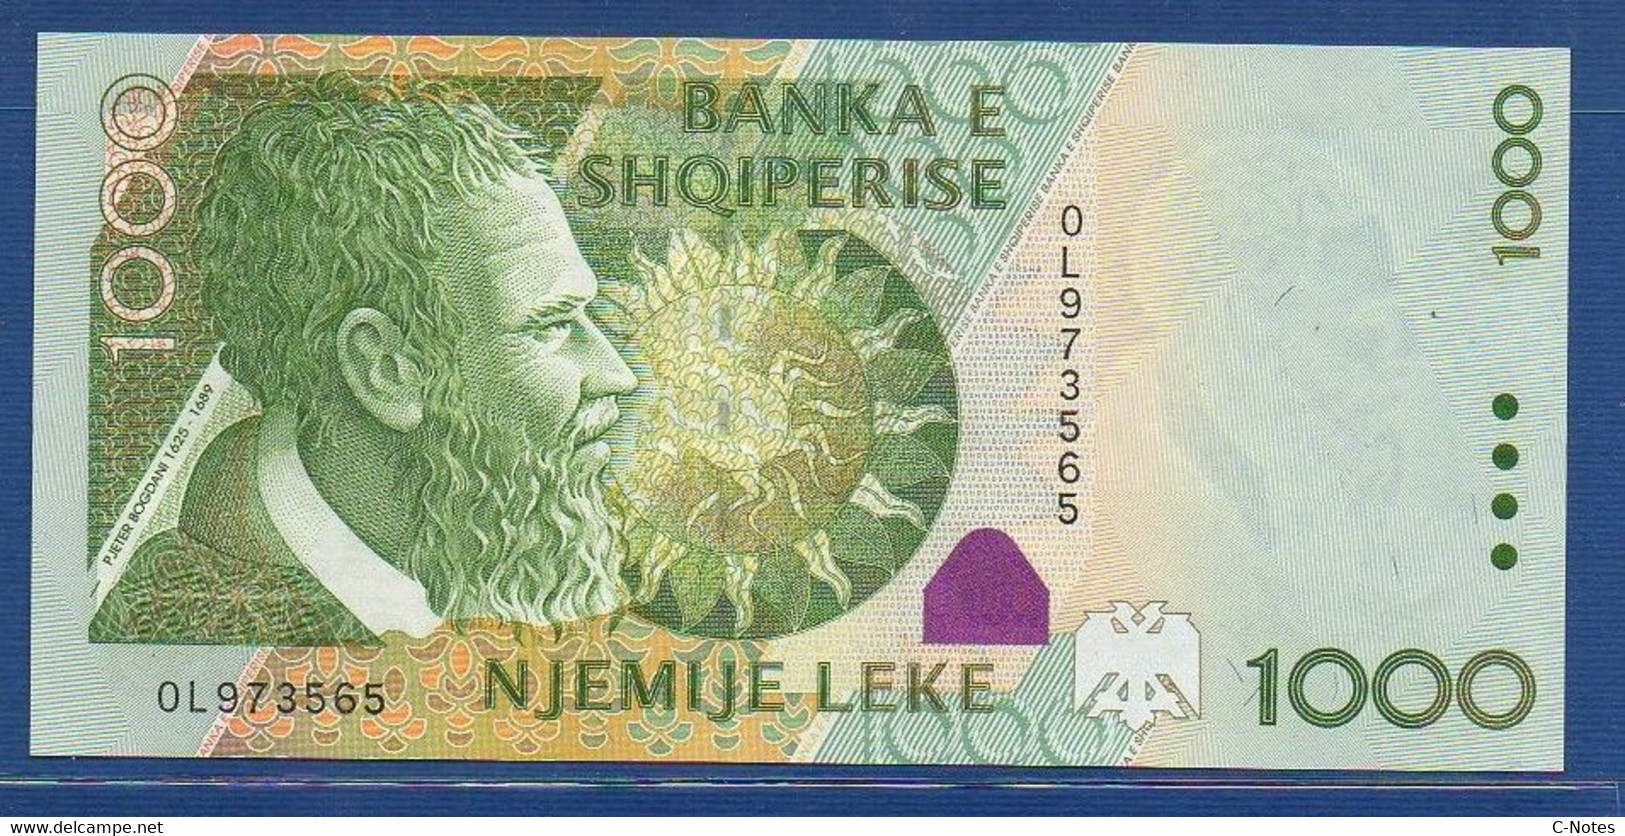 ALBANIA - P.69 – 1.000 1000 LEKE 2001 UNC, Serie OL973565 - Albania